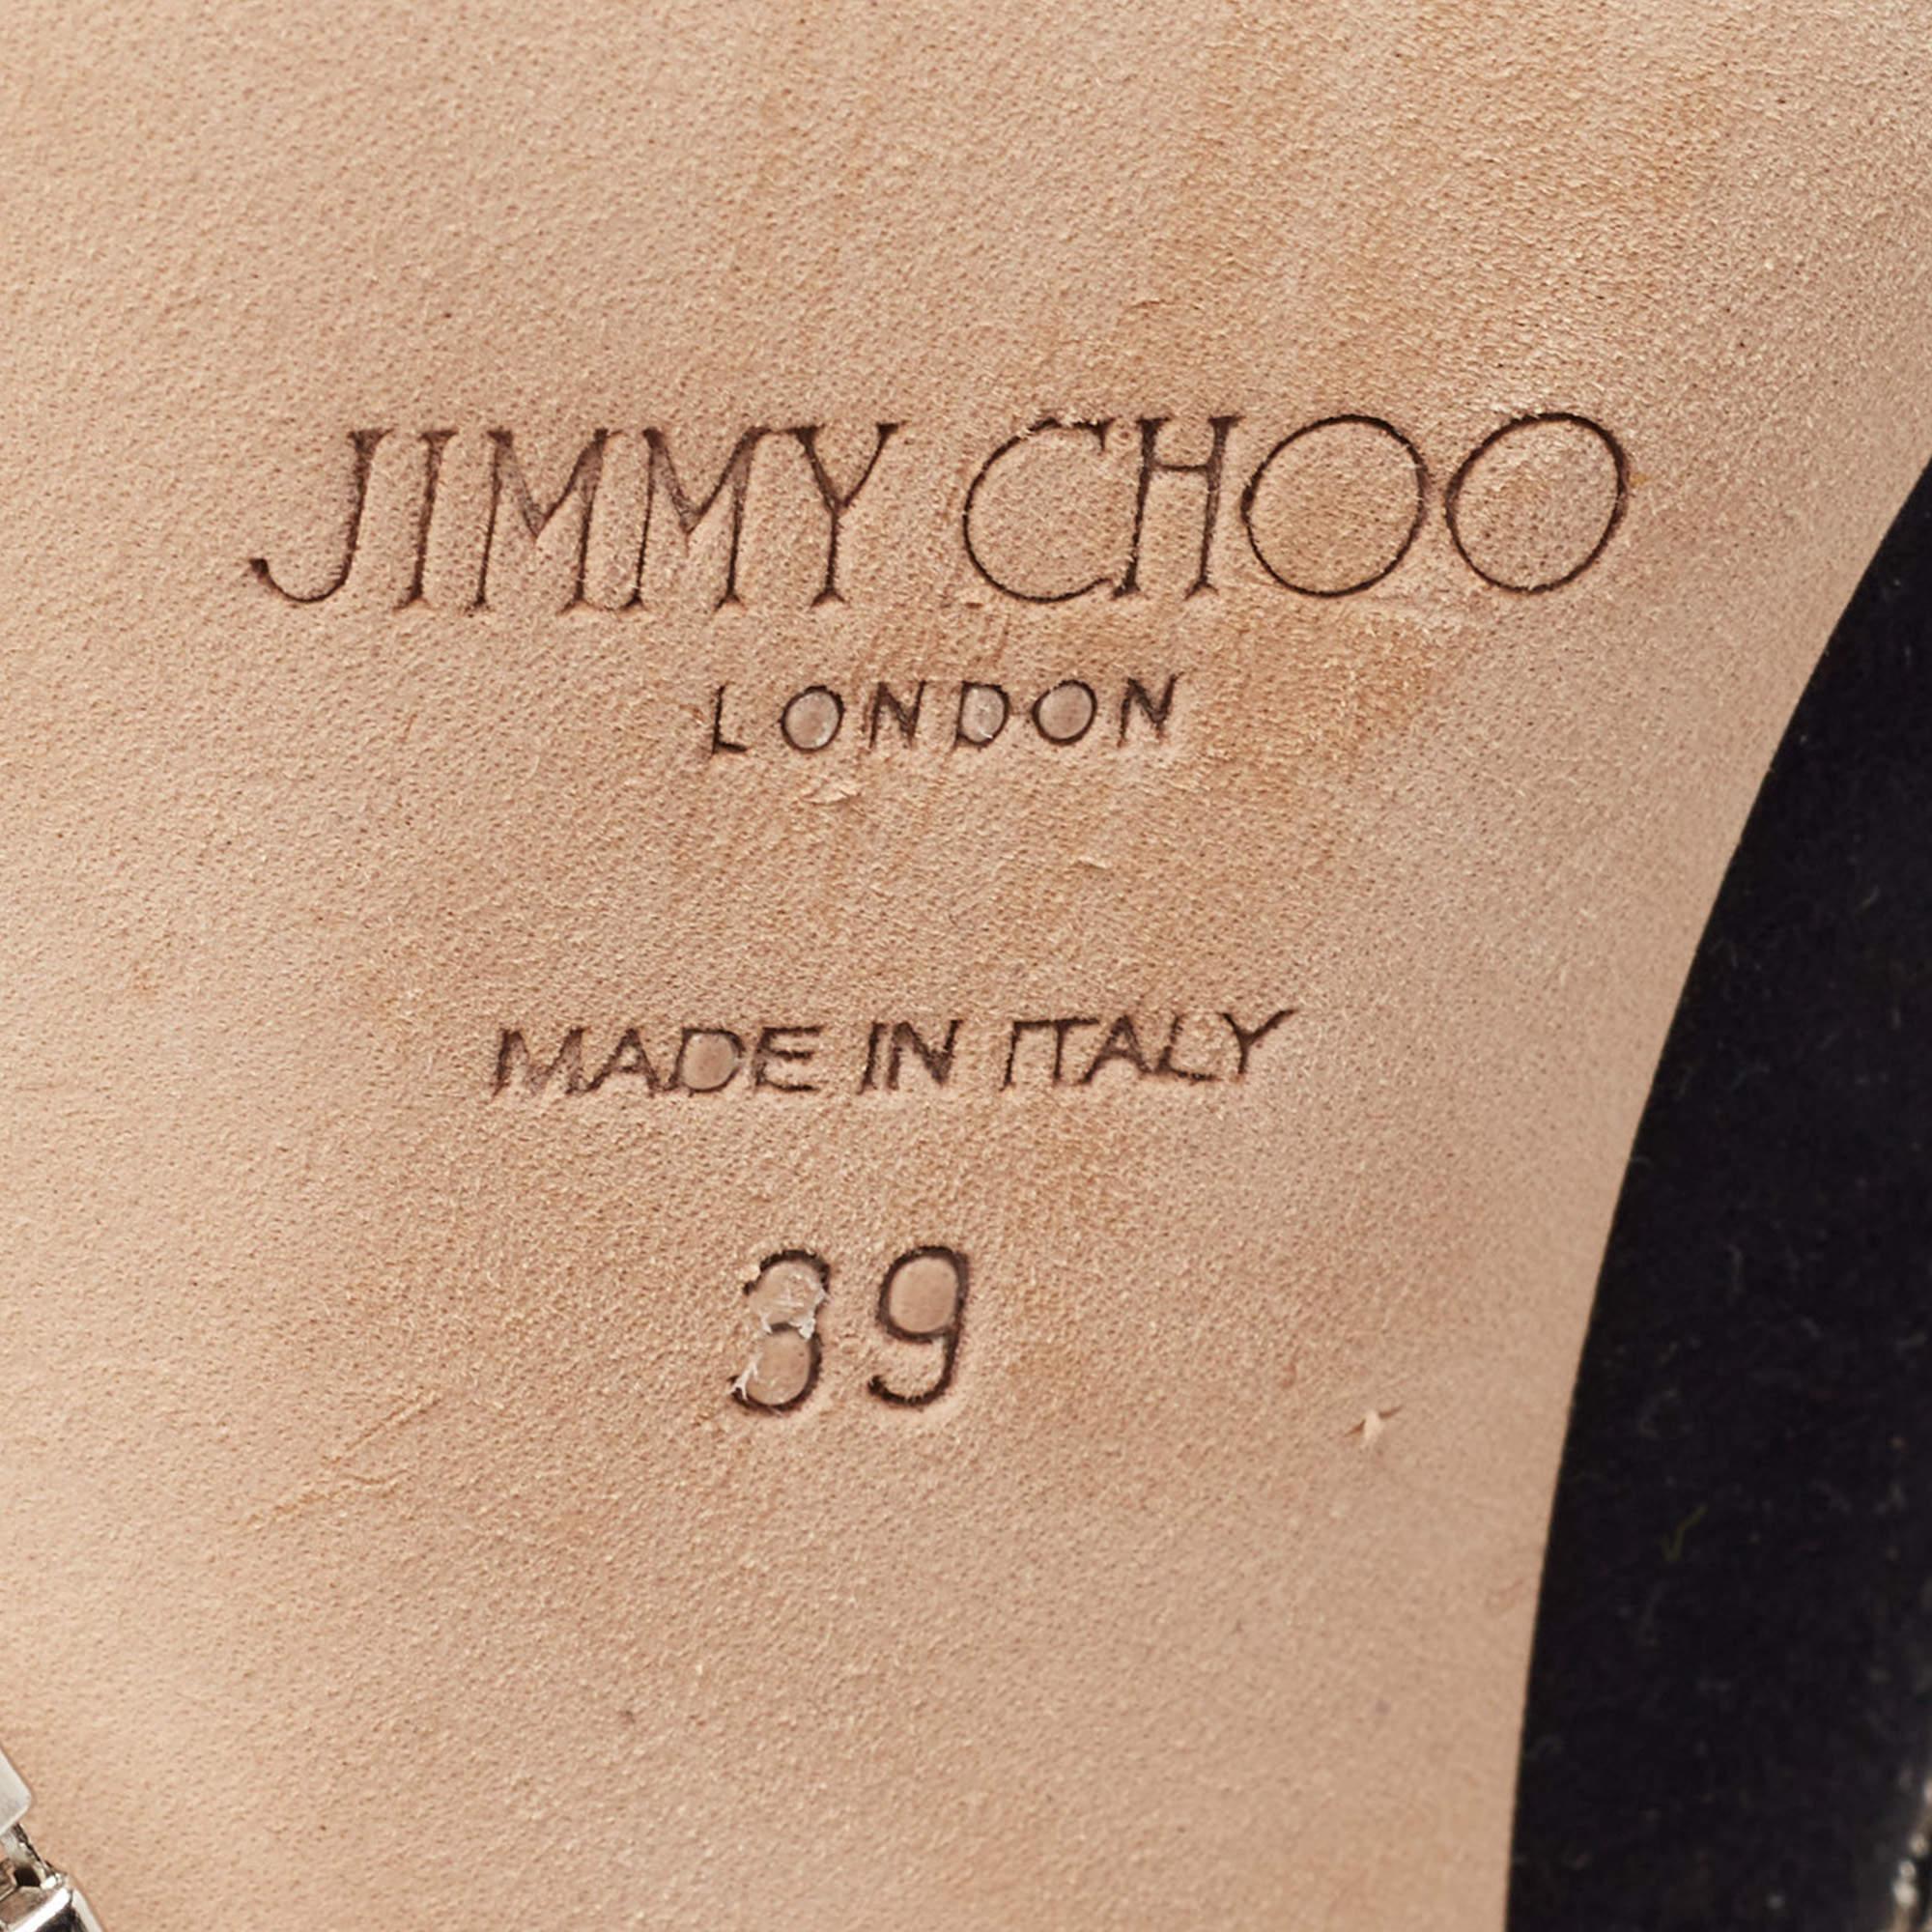 Jimmy Choo Black Suede Crystal Embellished Scotty Pumps Size 39 1